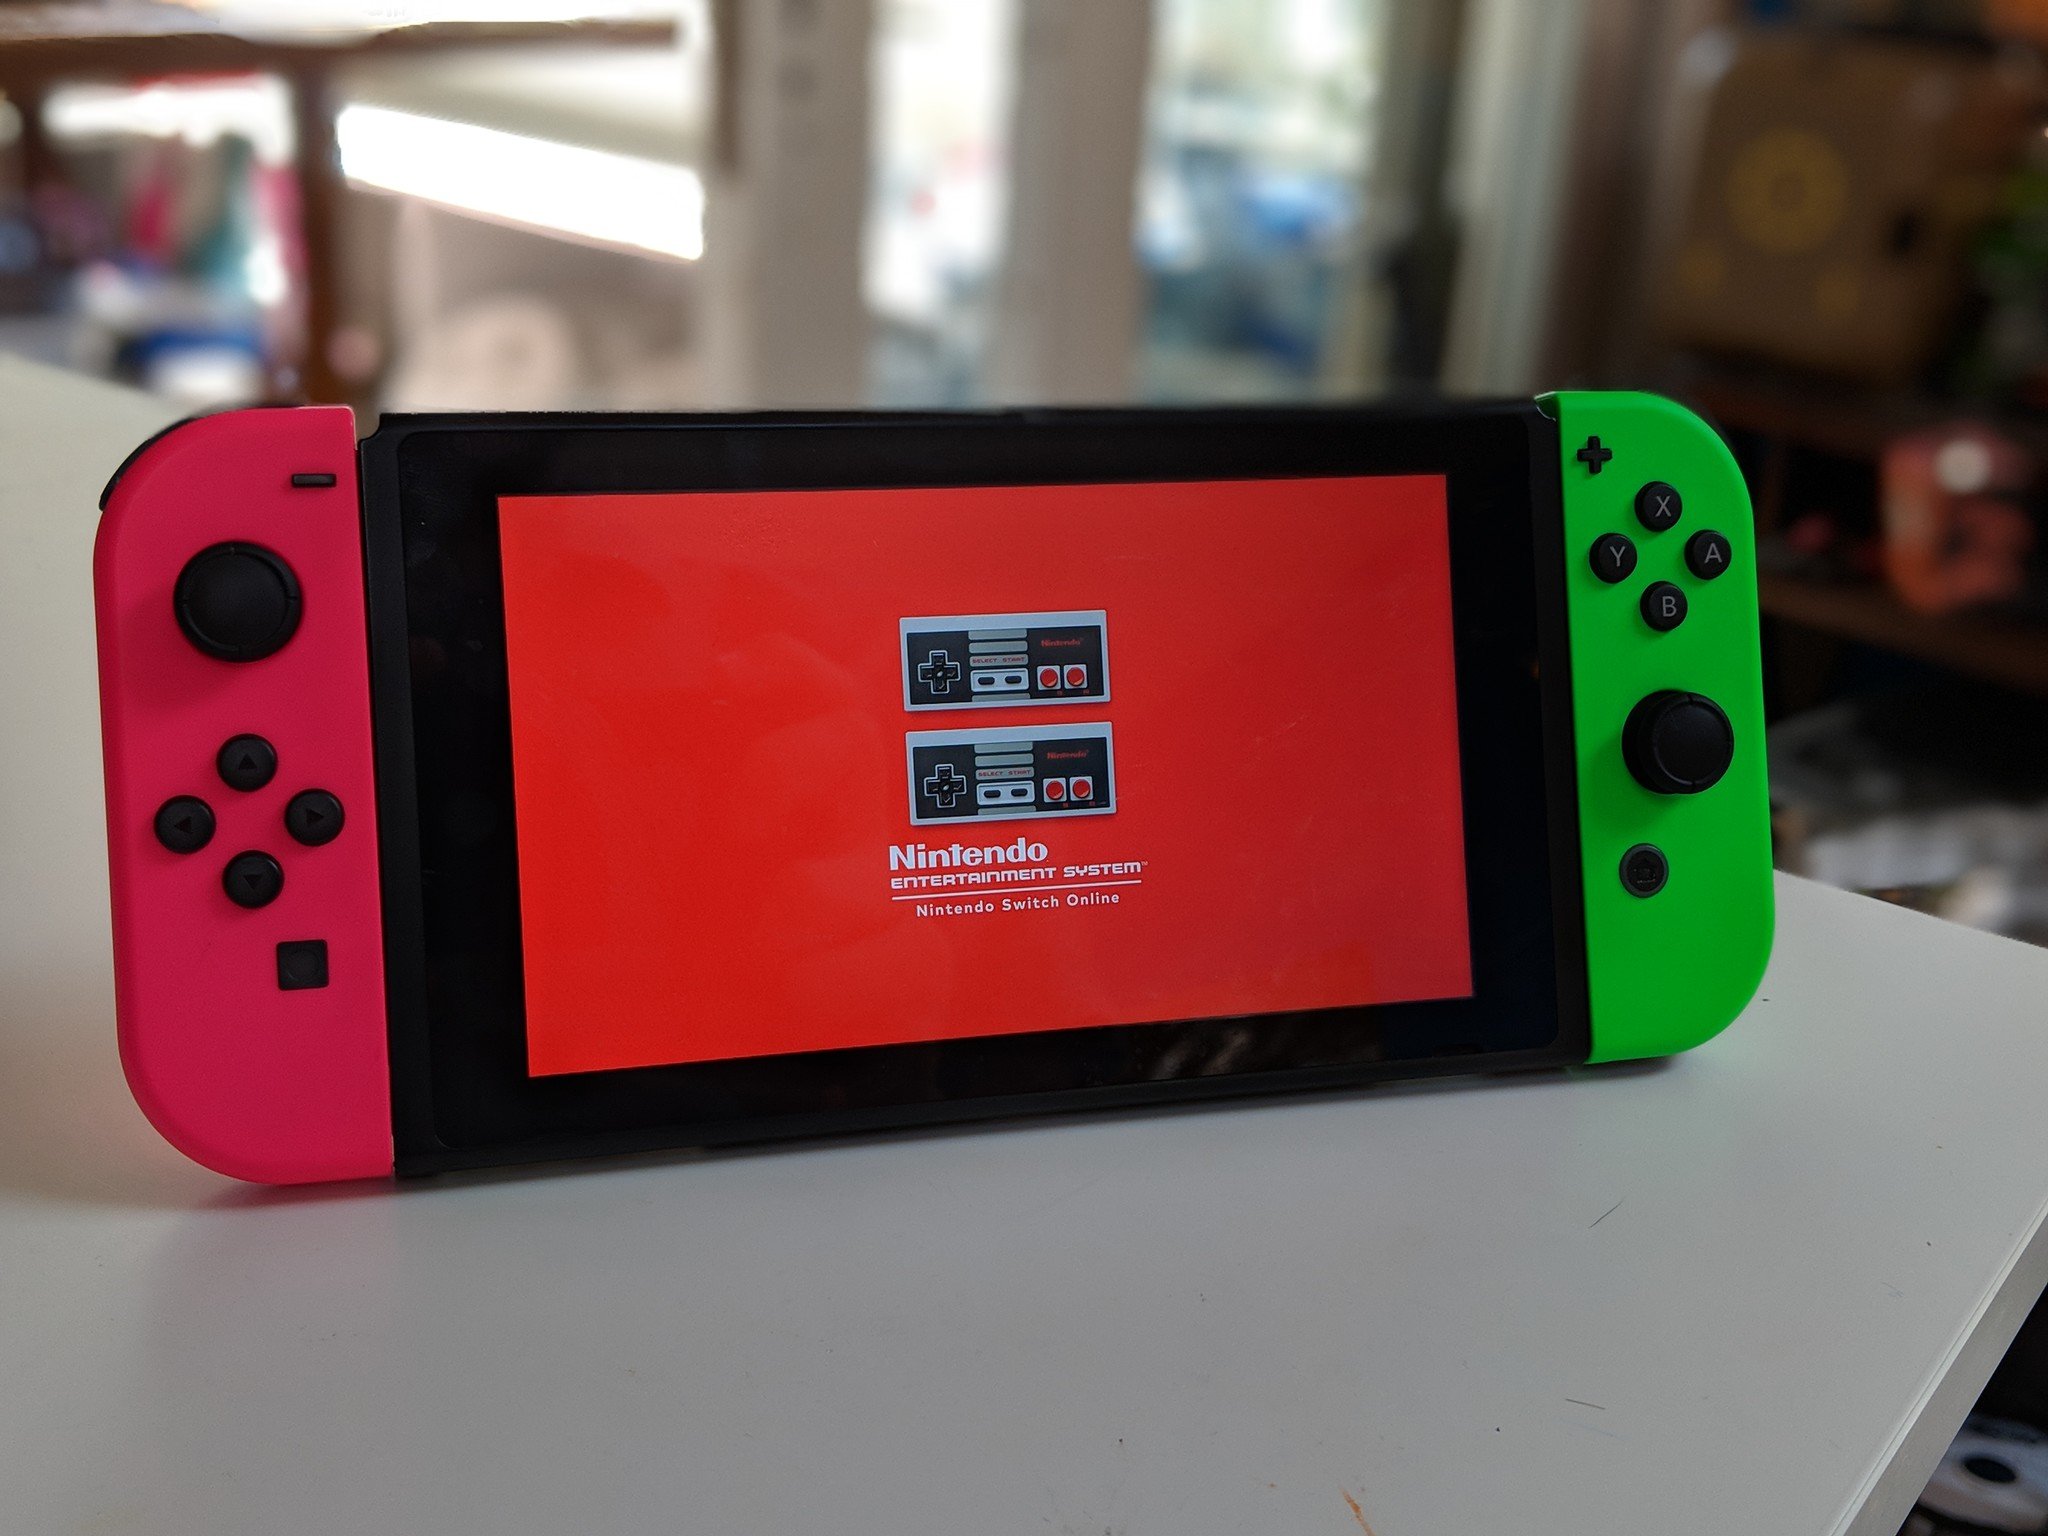 Nintendo Switch Online - Play Nintendo